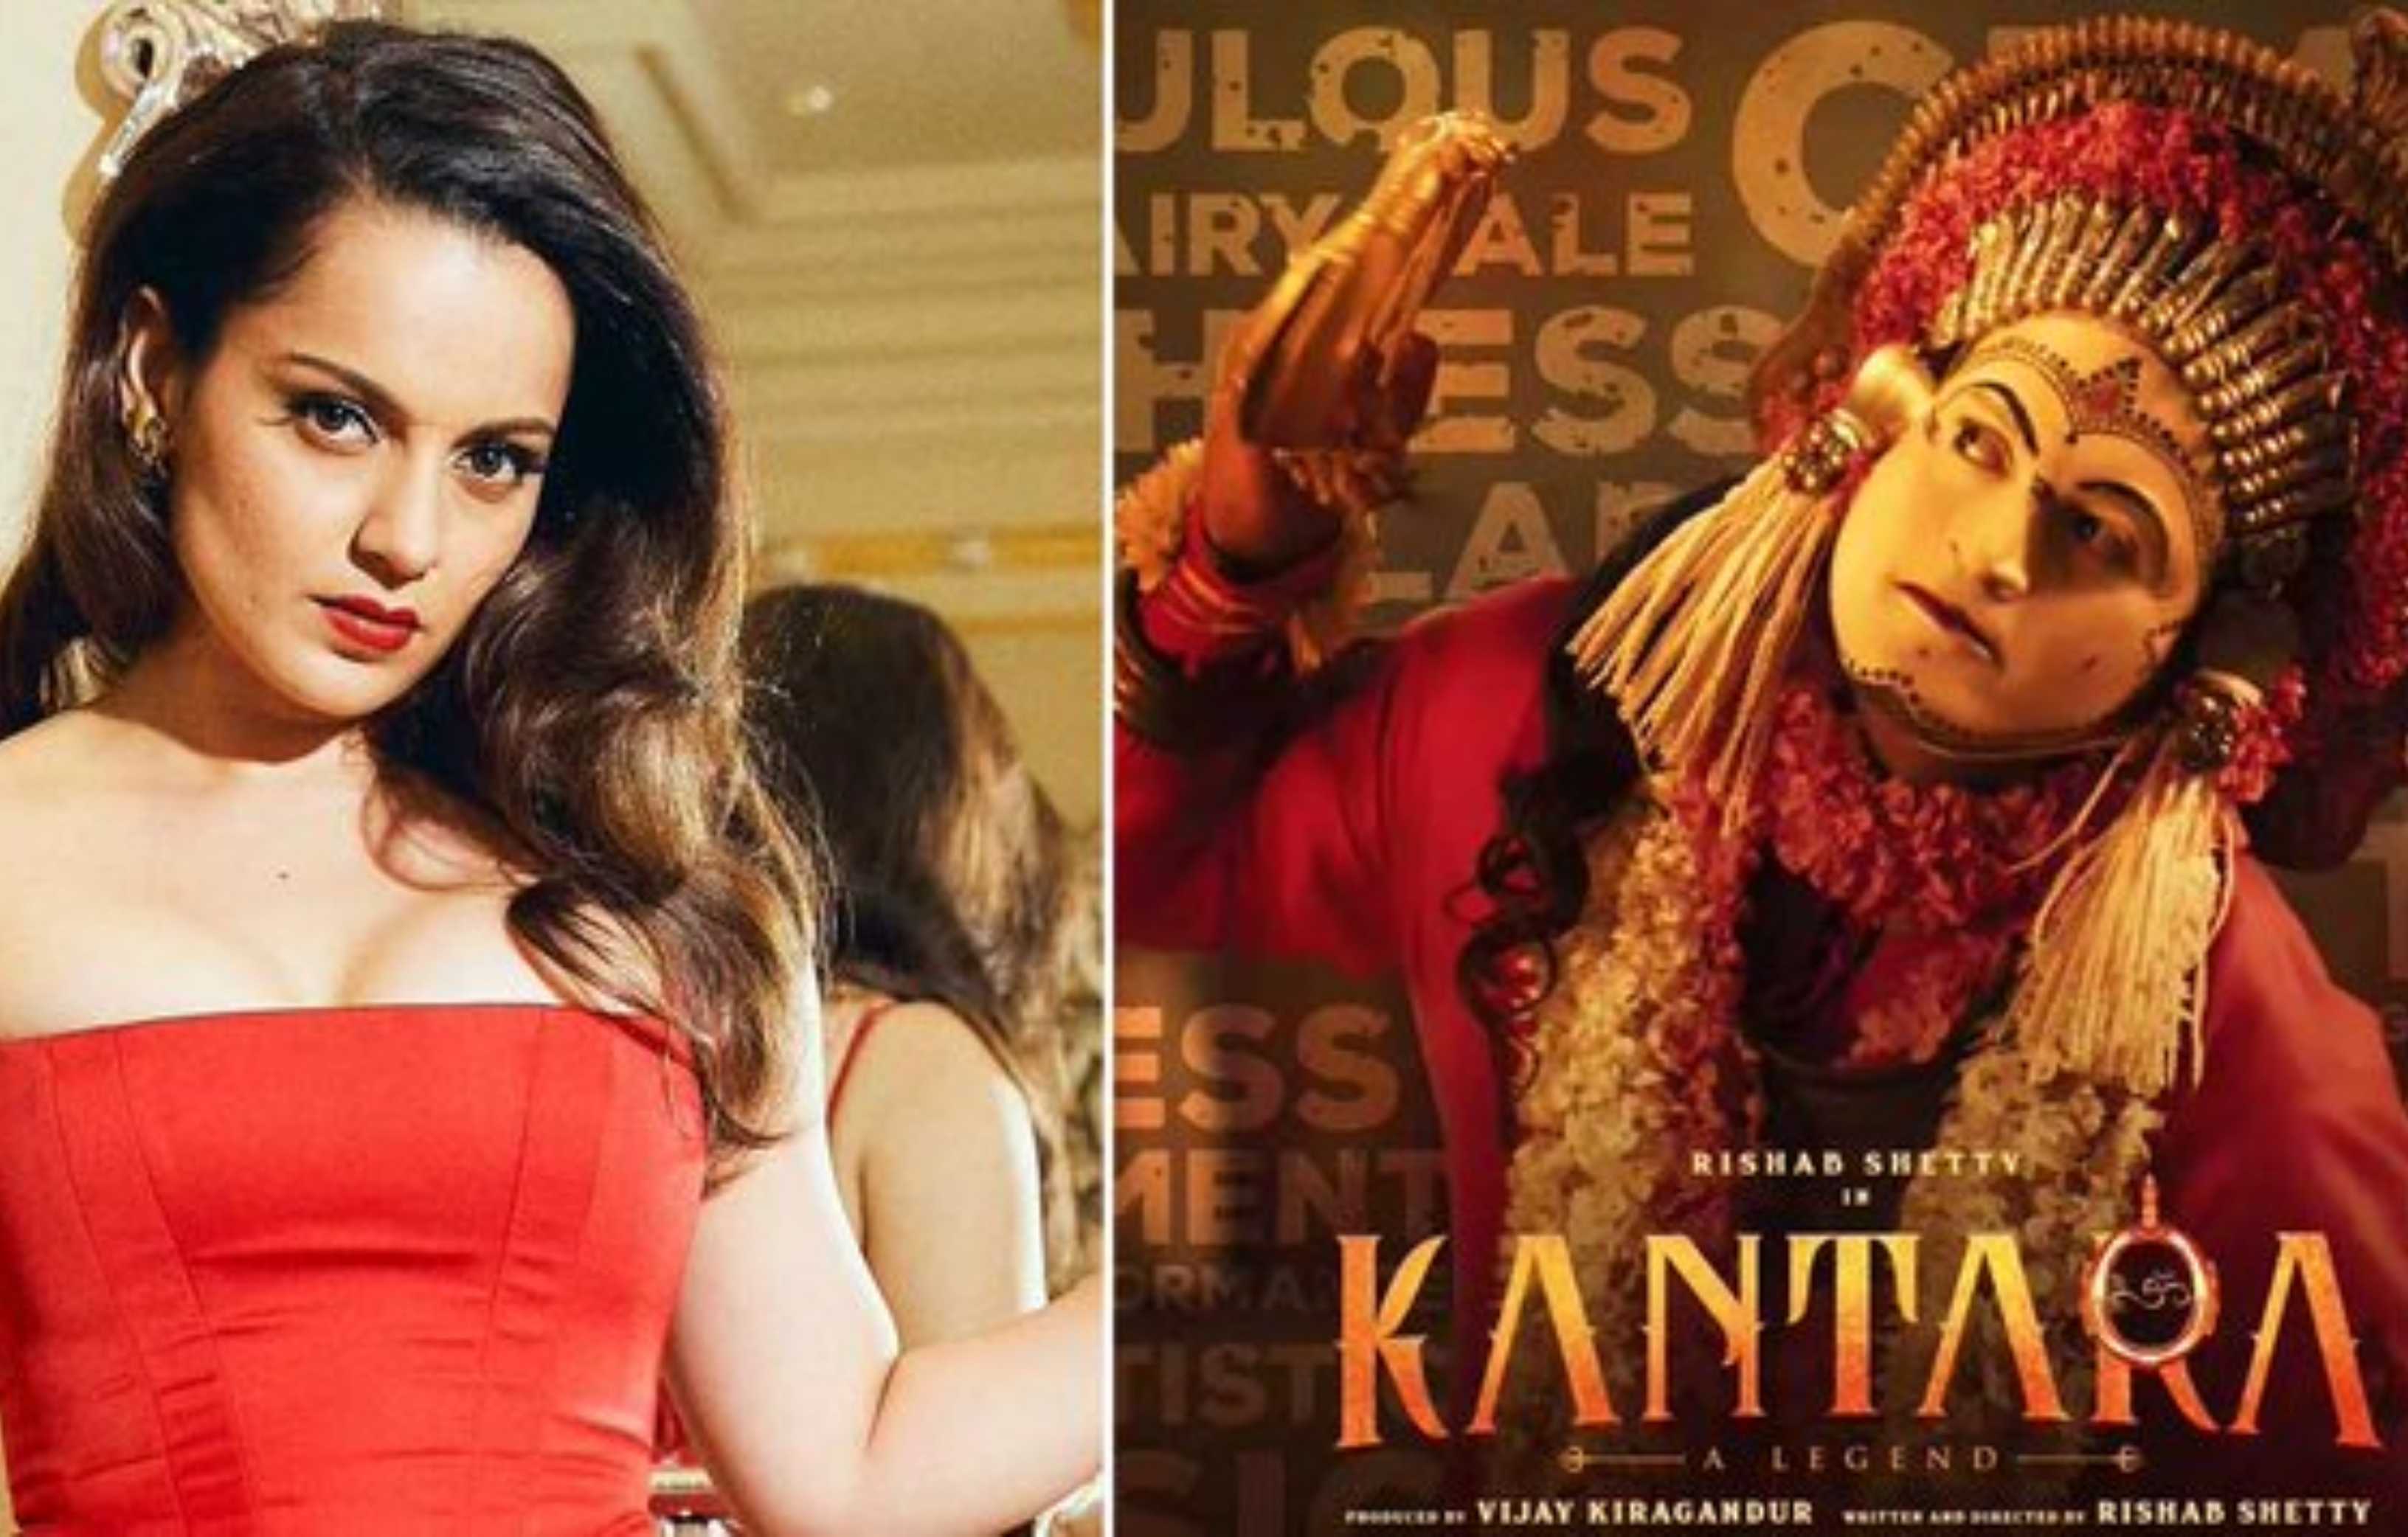 Kangana Ranaut backs calls for Kantara’s Oscar entry as she reviews Rishab Shetty’s film: ‘I am still shaking’